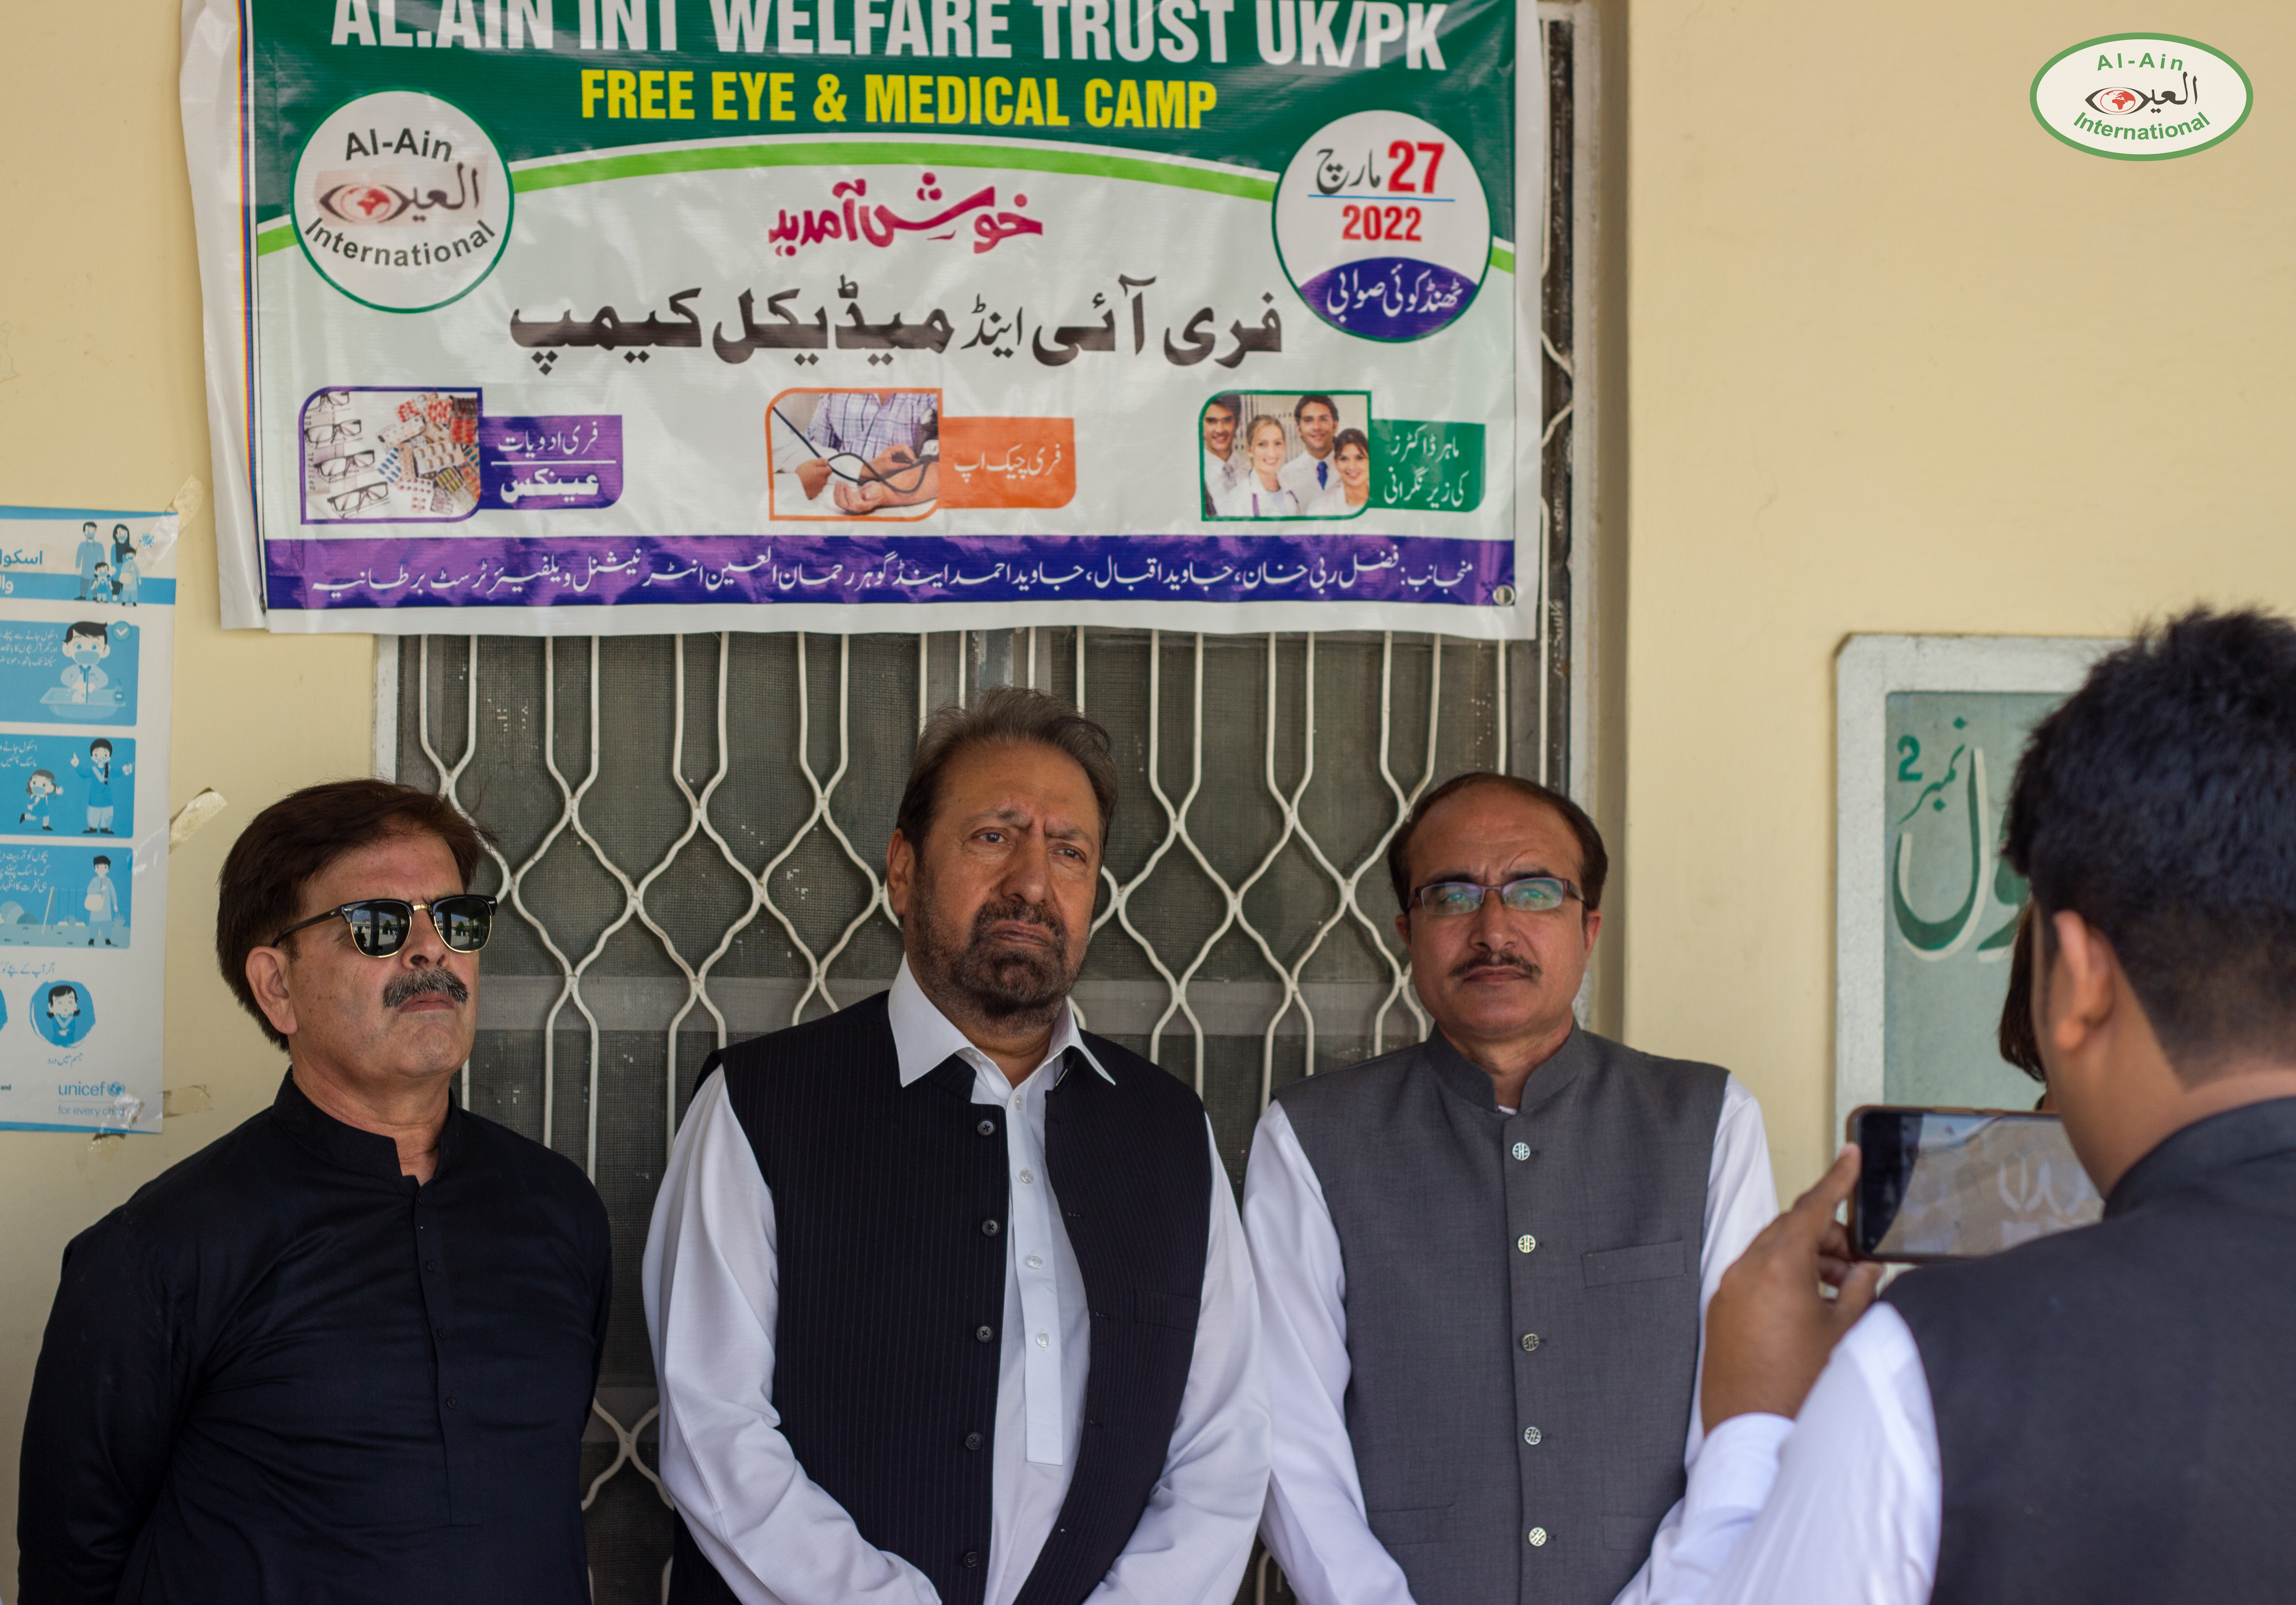 Free Medical and Eye Camp held in Thandkoi, Swabi, KPK Pakistan 27 March 2022